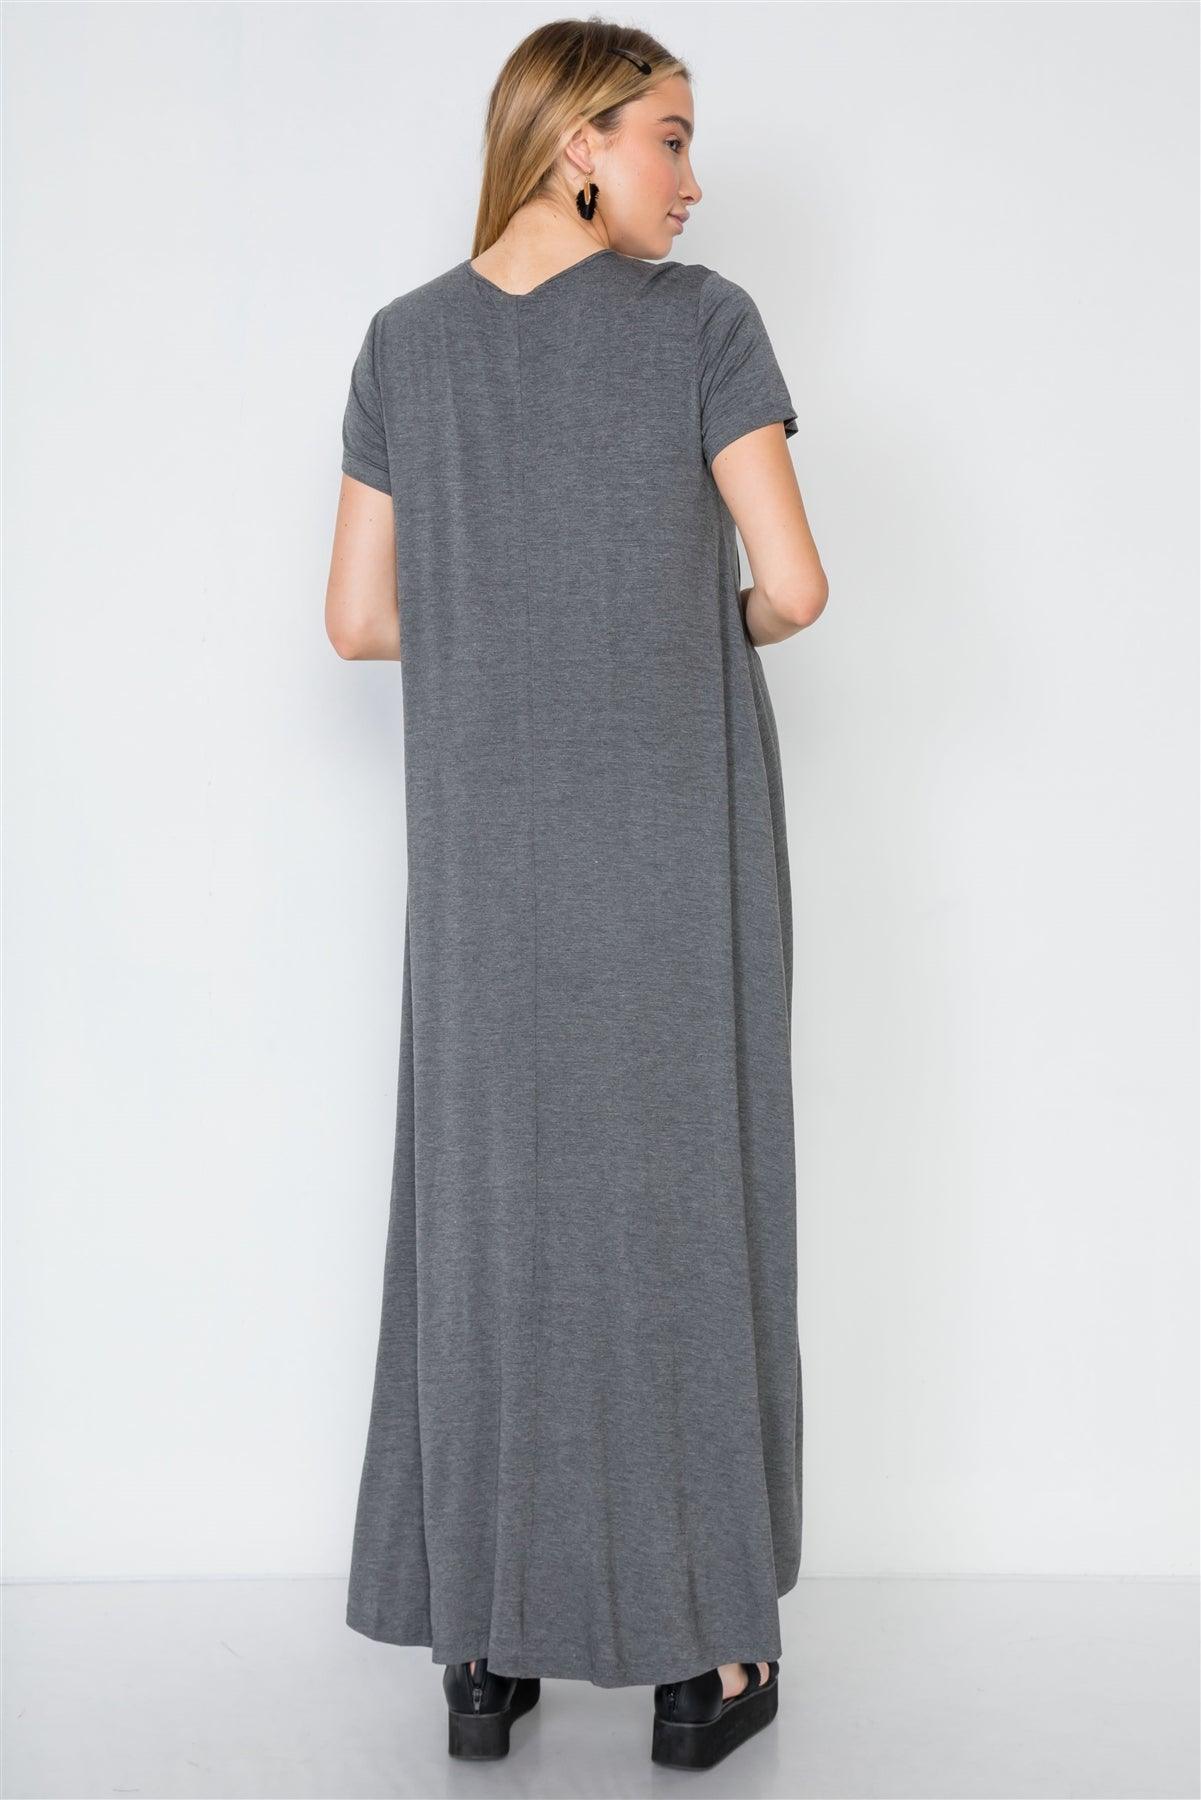 Mid Grey Basic Short Sleeve Comfy Maxi Dress /2-2-2